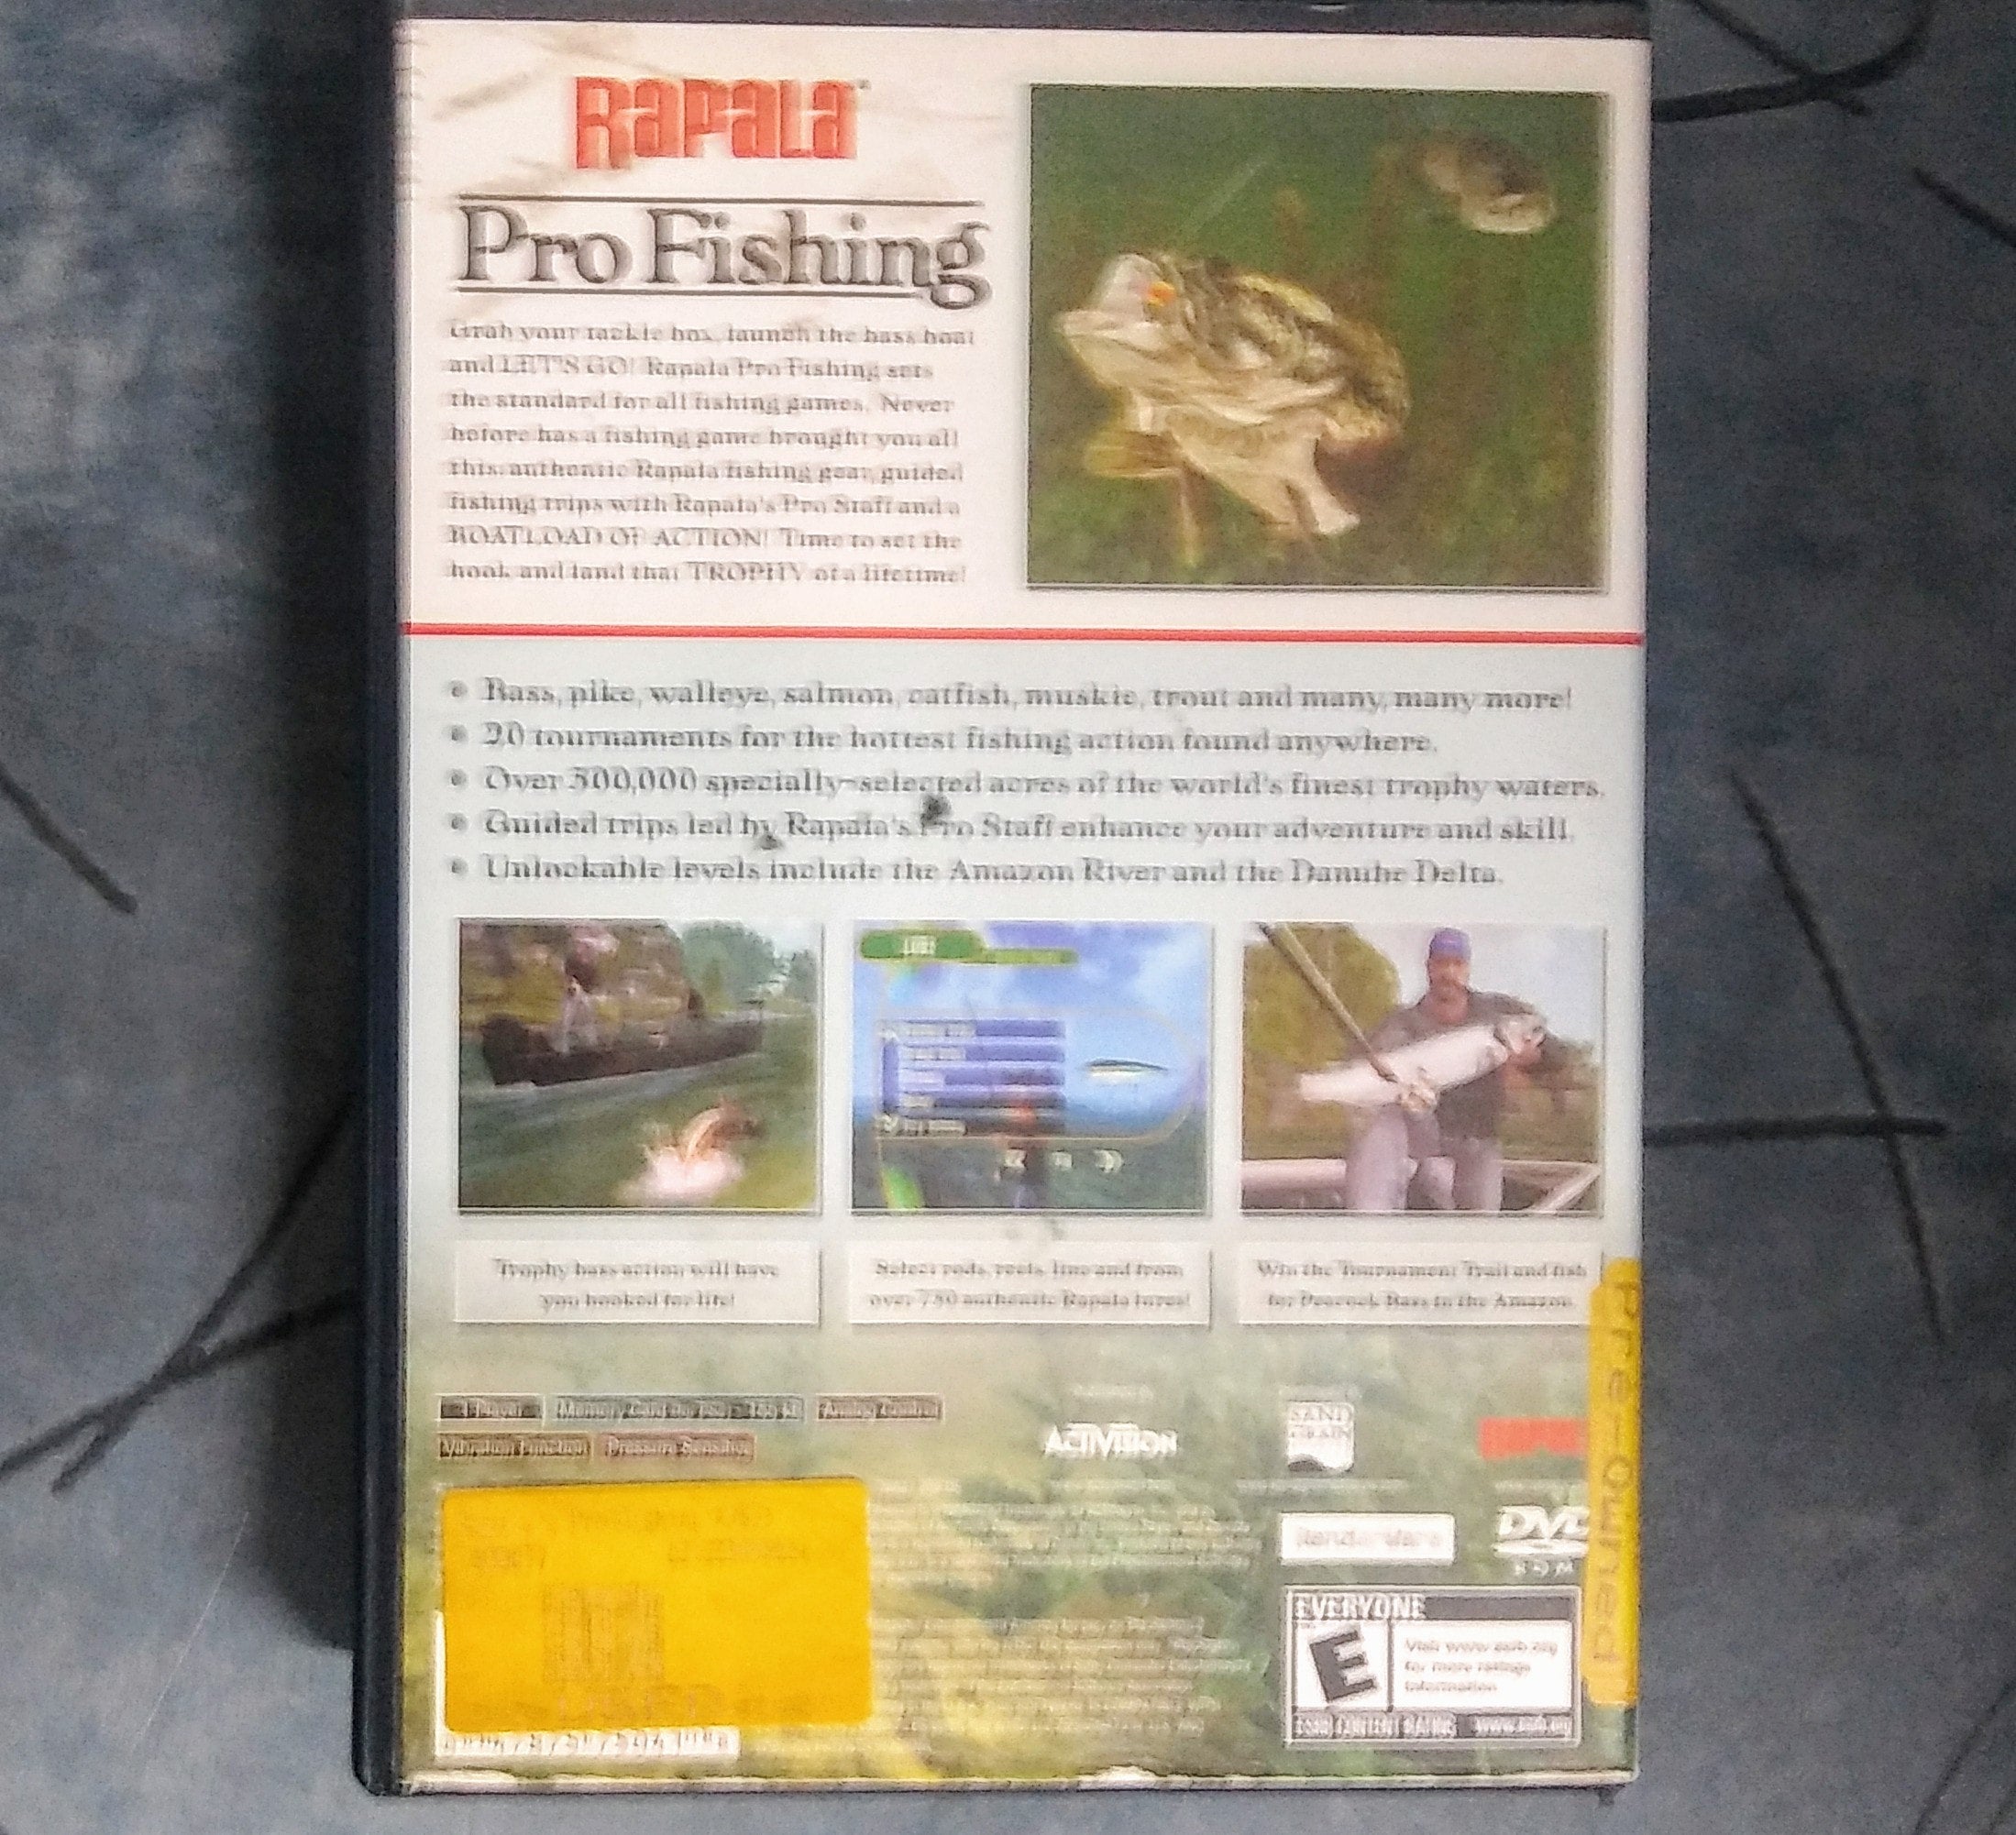 Rapala Pro Fishing PS2